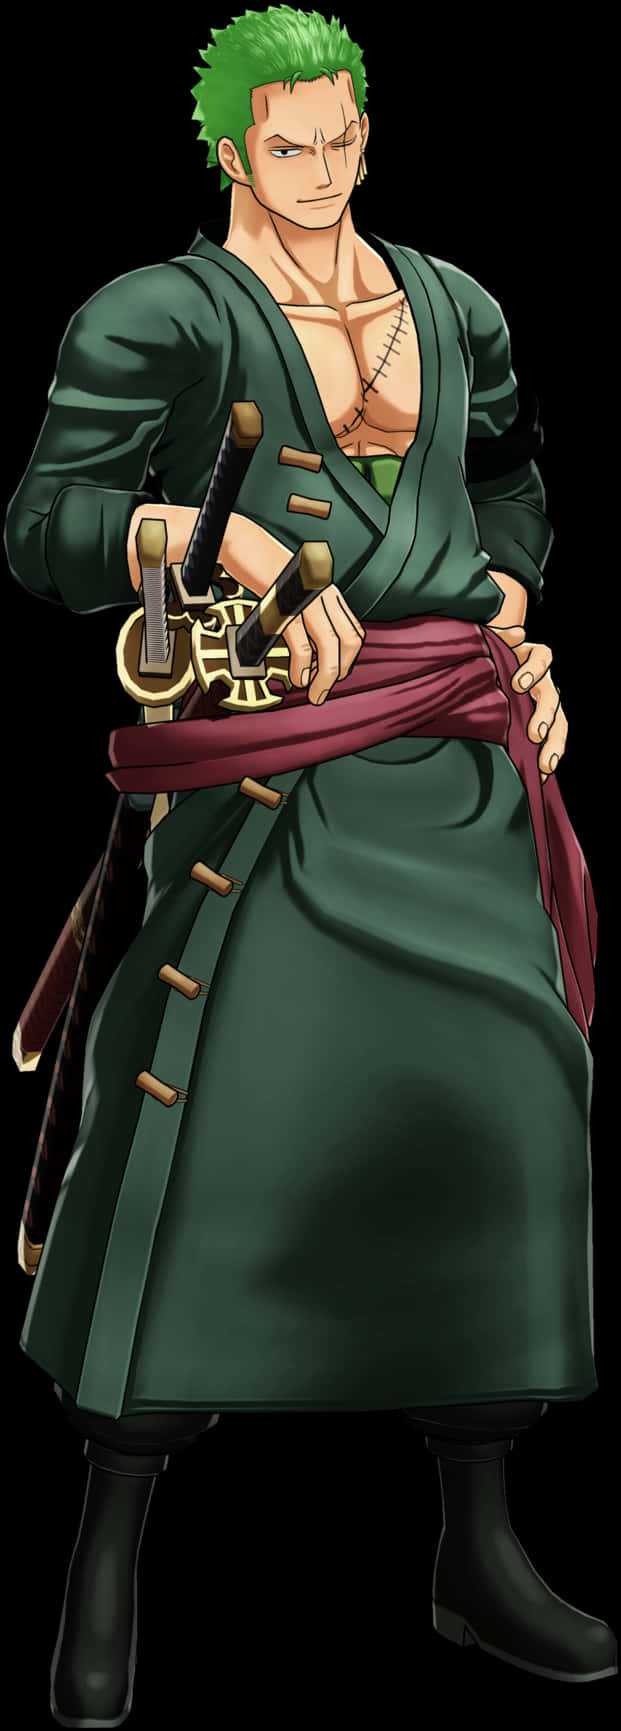 Green Haired Swordsman Anime Character